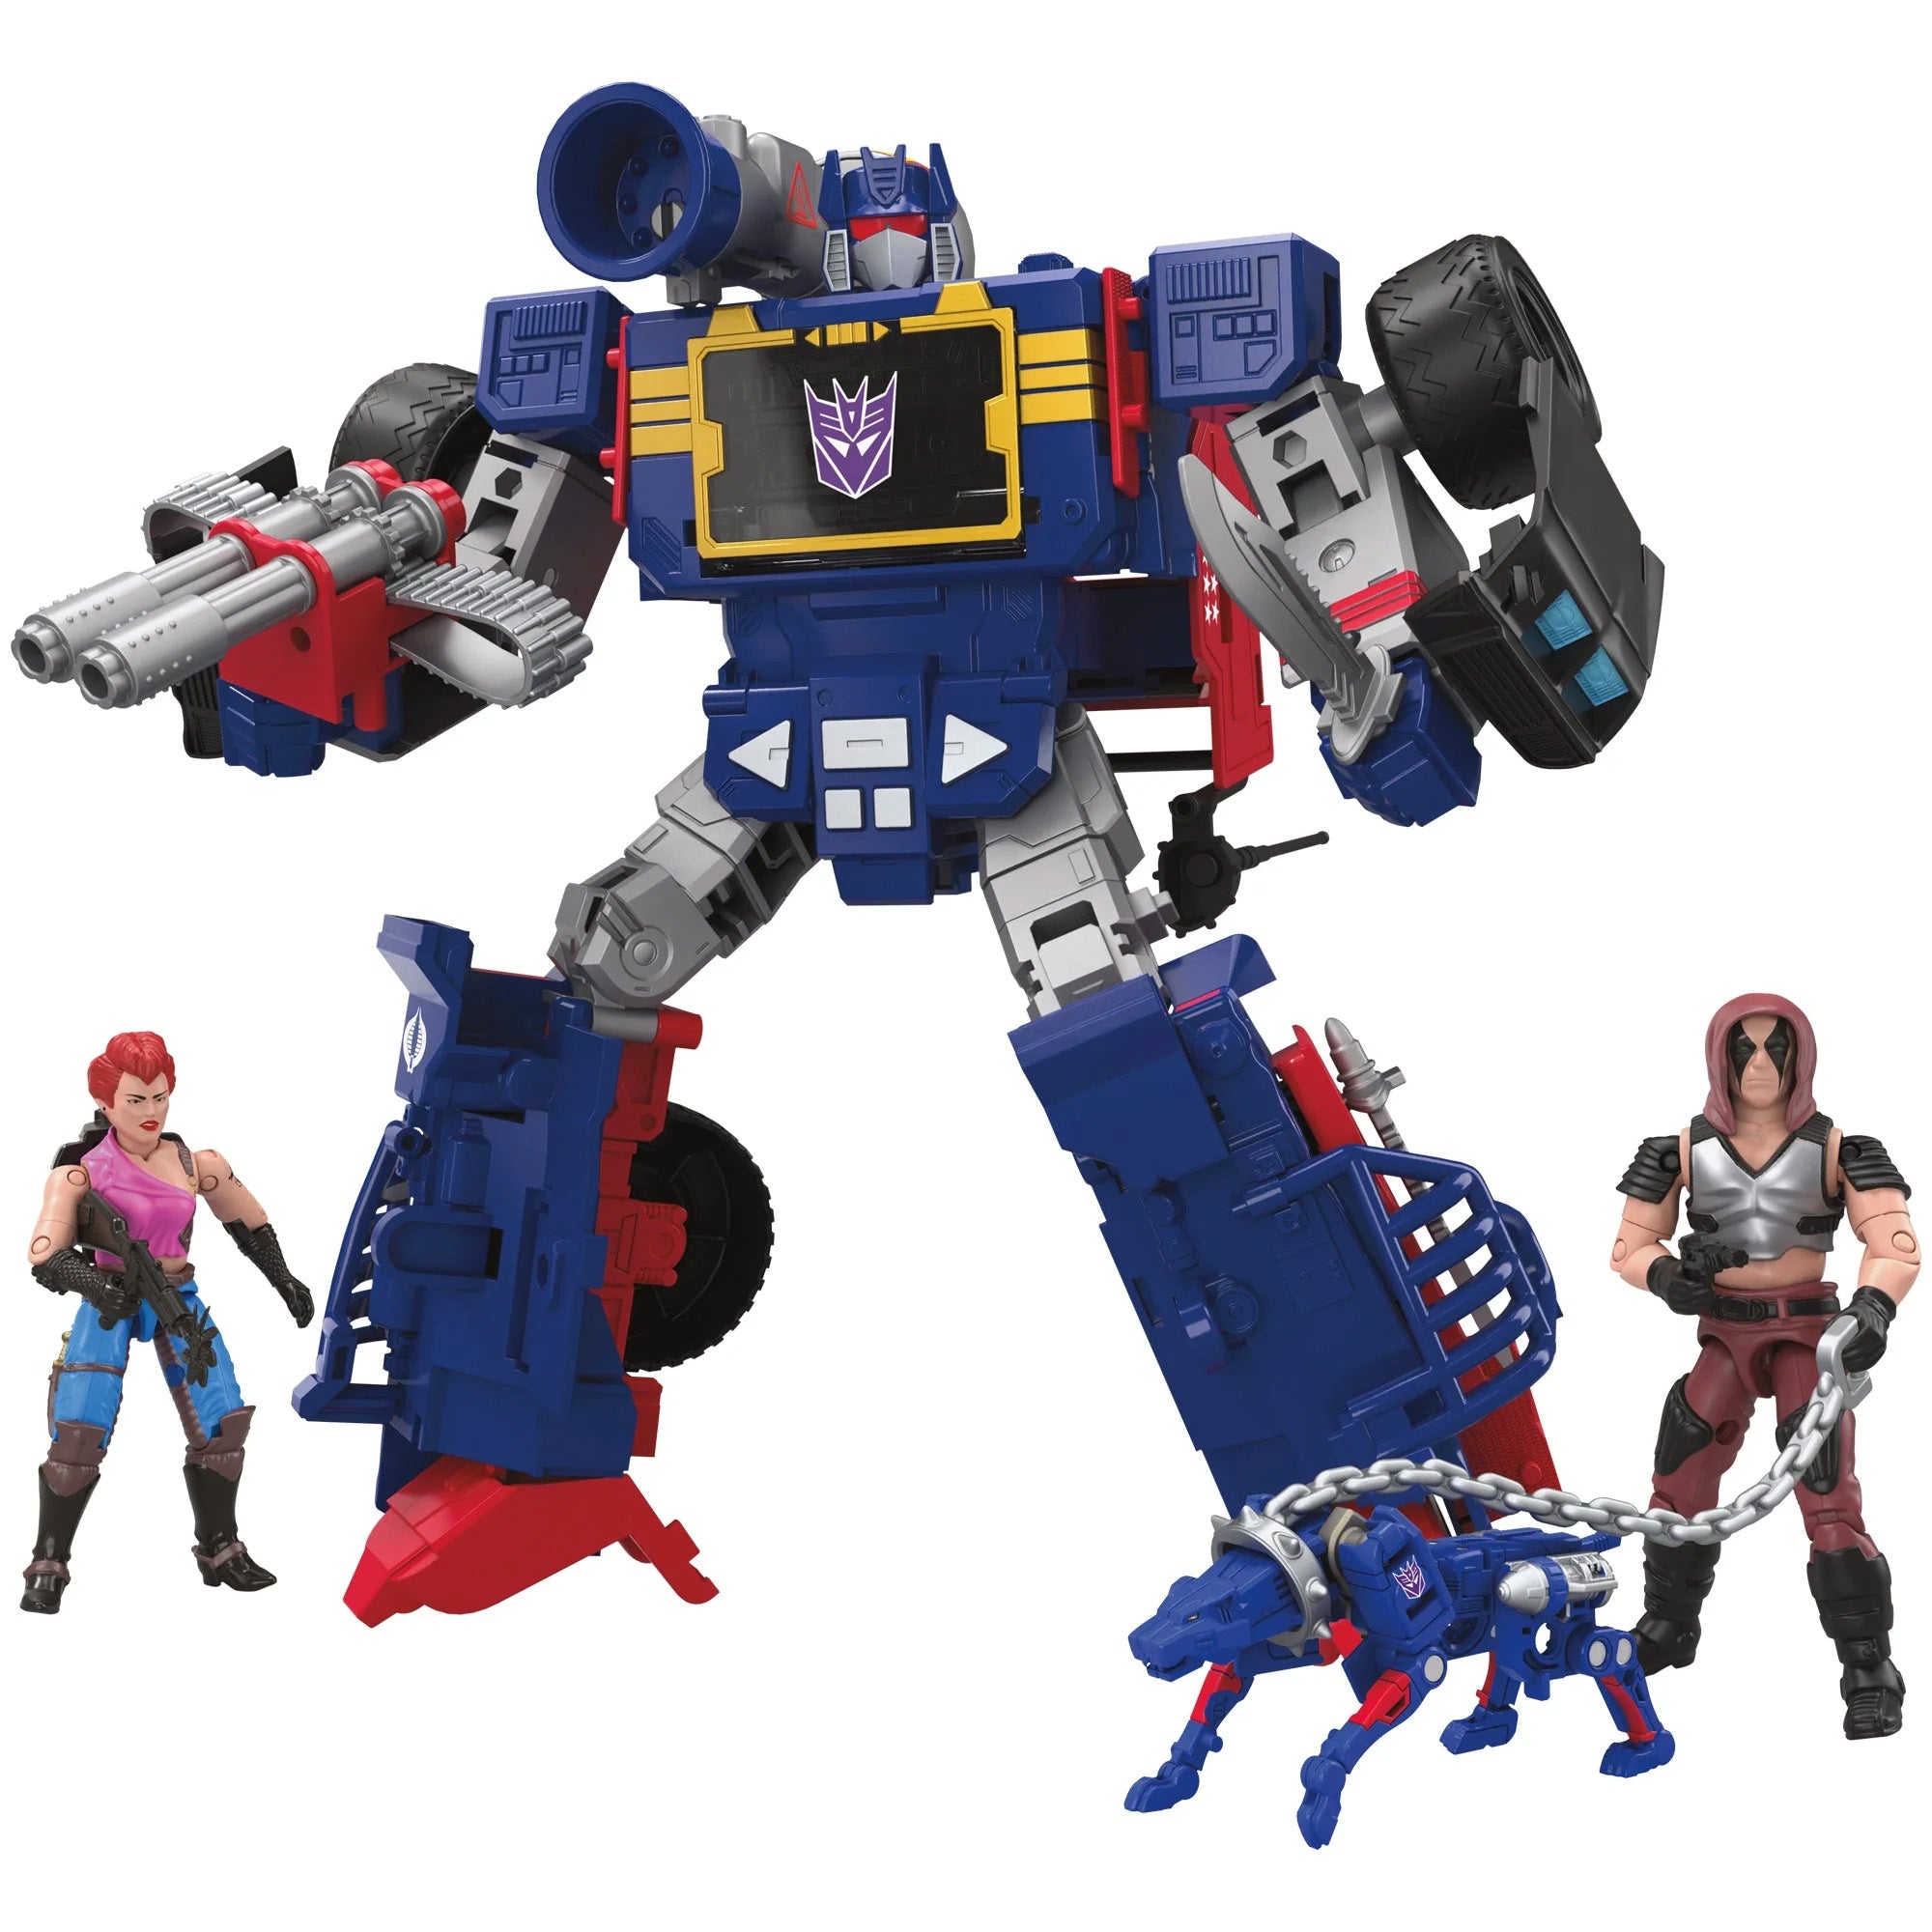 Hasbro - Transformers Collaborative - G.I. Joe x Transformers - Soundwave Dreadnok Thunder Machine, Zartan &amp; Zarana - Marvelous Toys